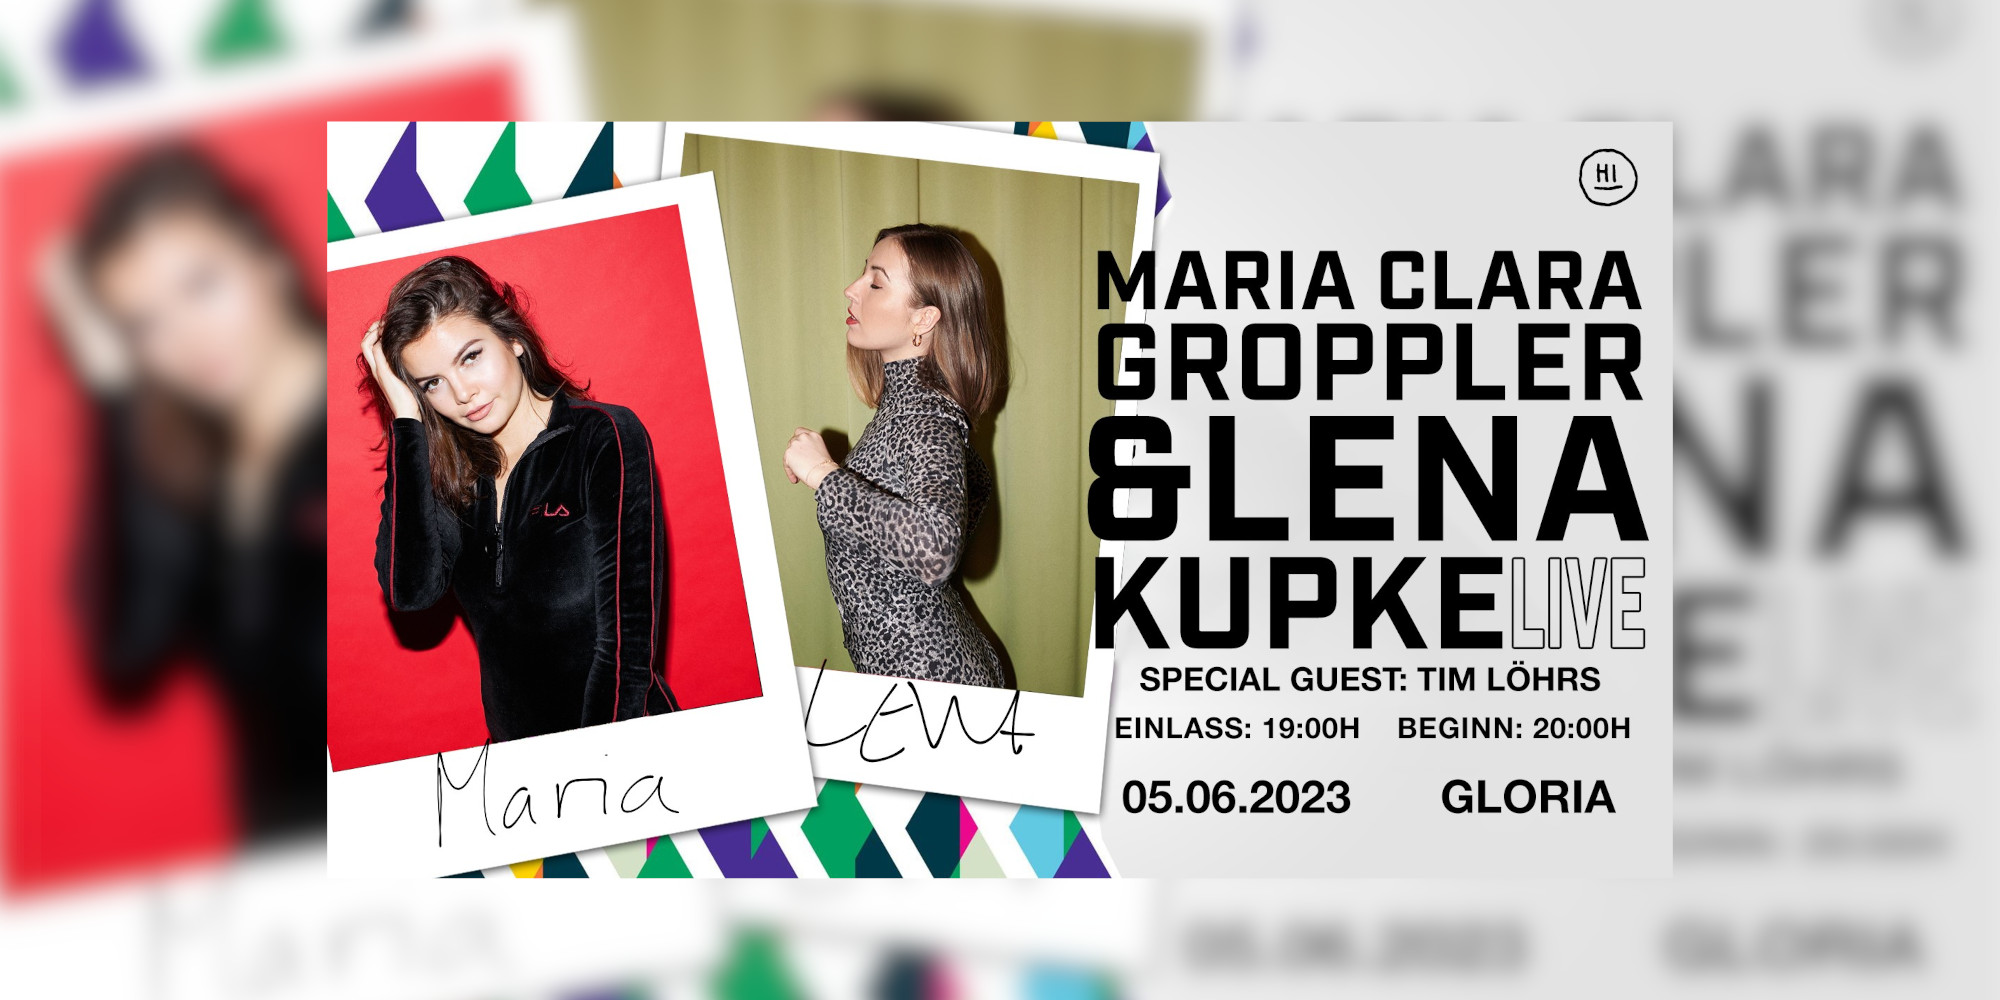 Maria Clara Groppler & Lena Kupke LIVE